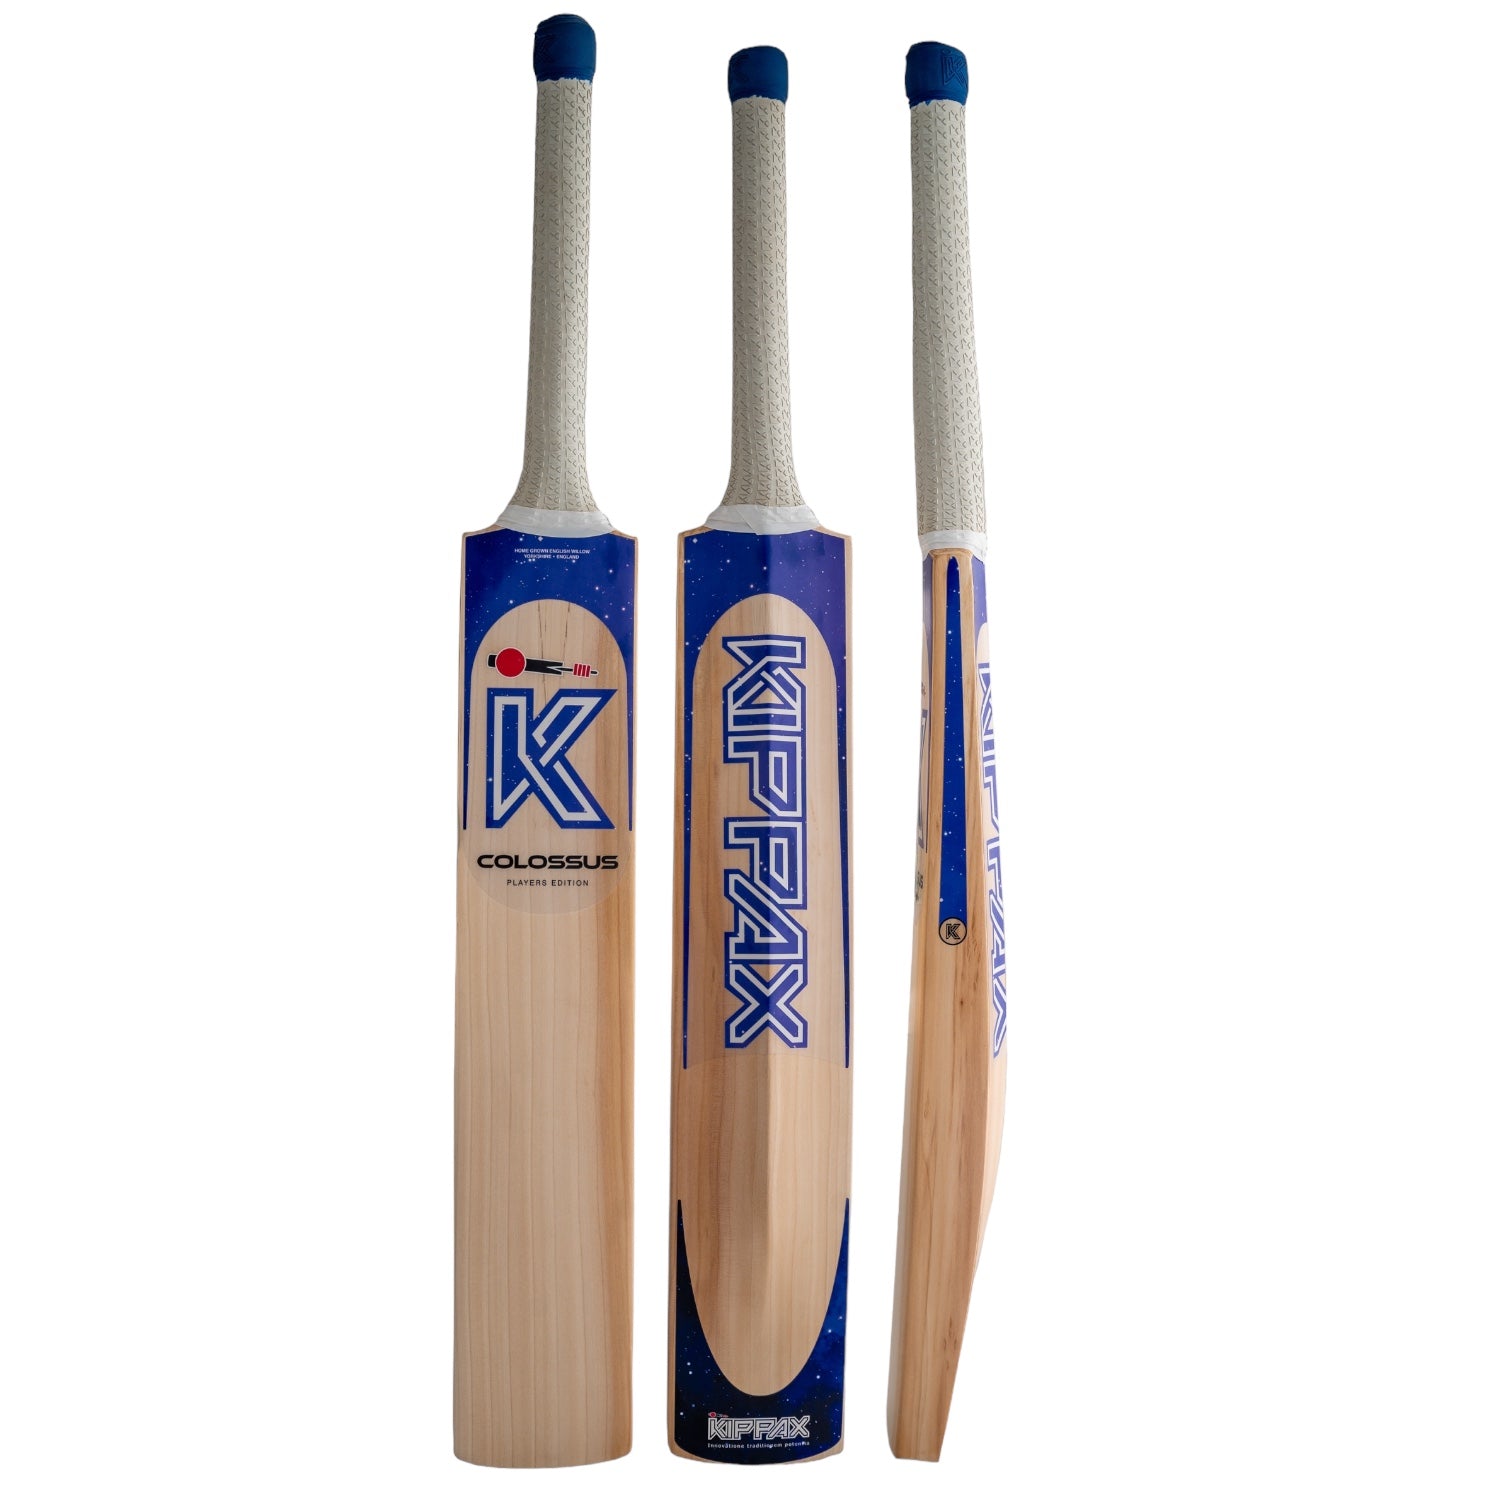 Kippax Colossus Players Edition Cricket Bat